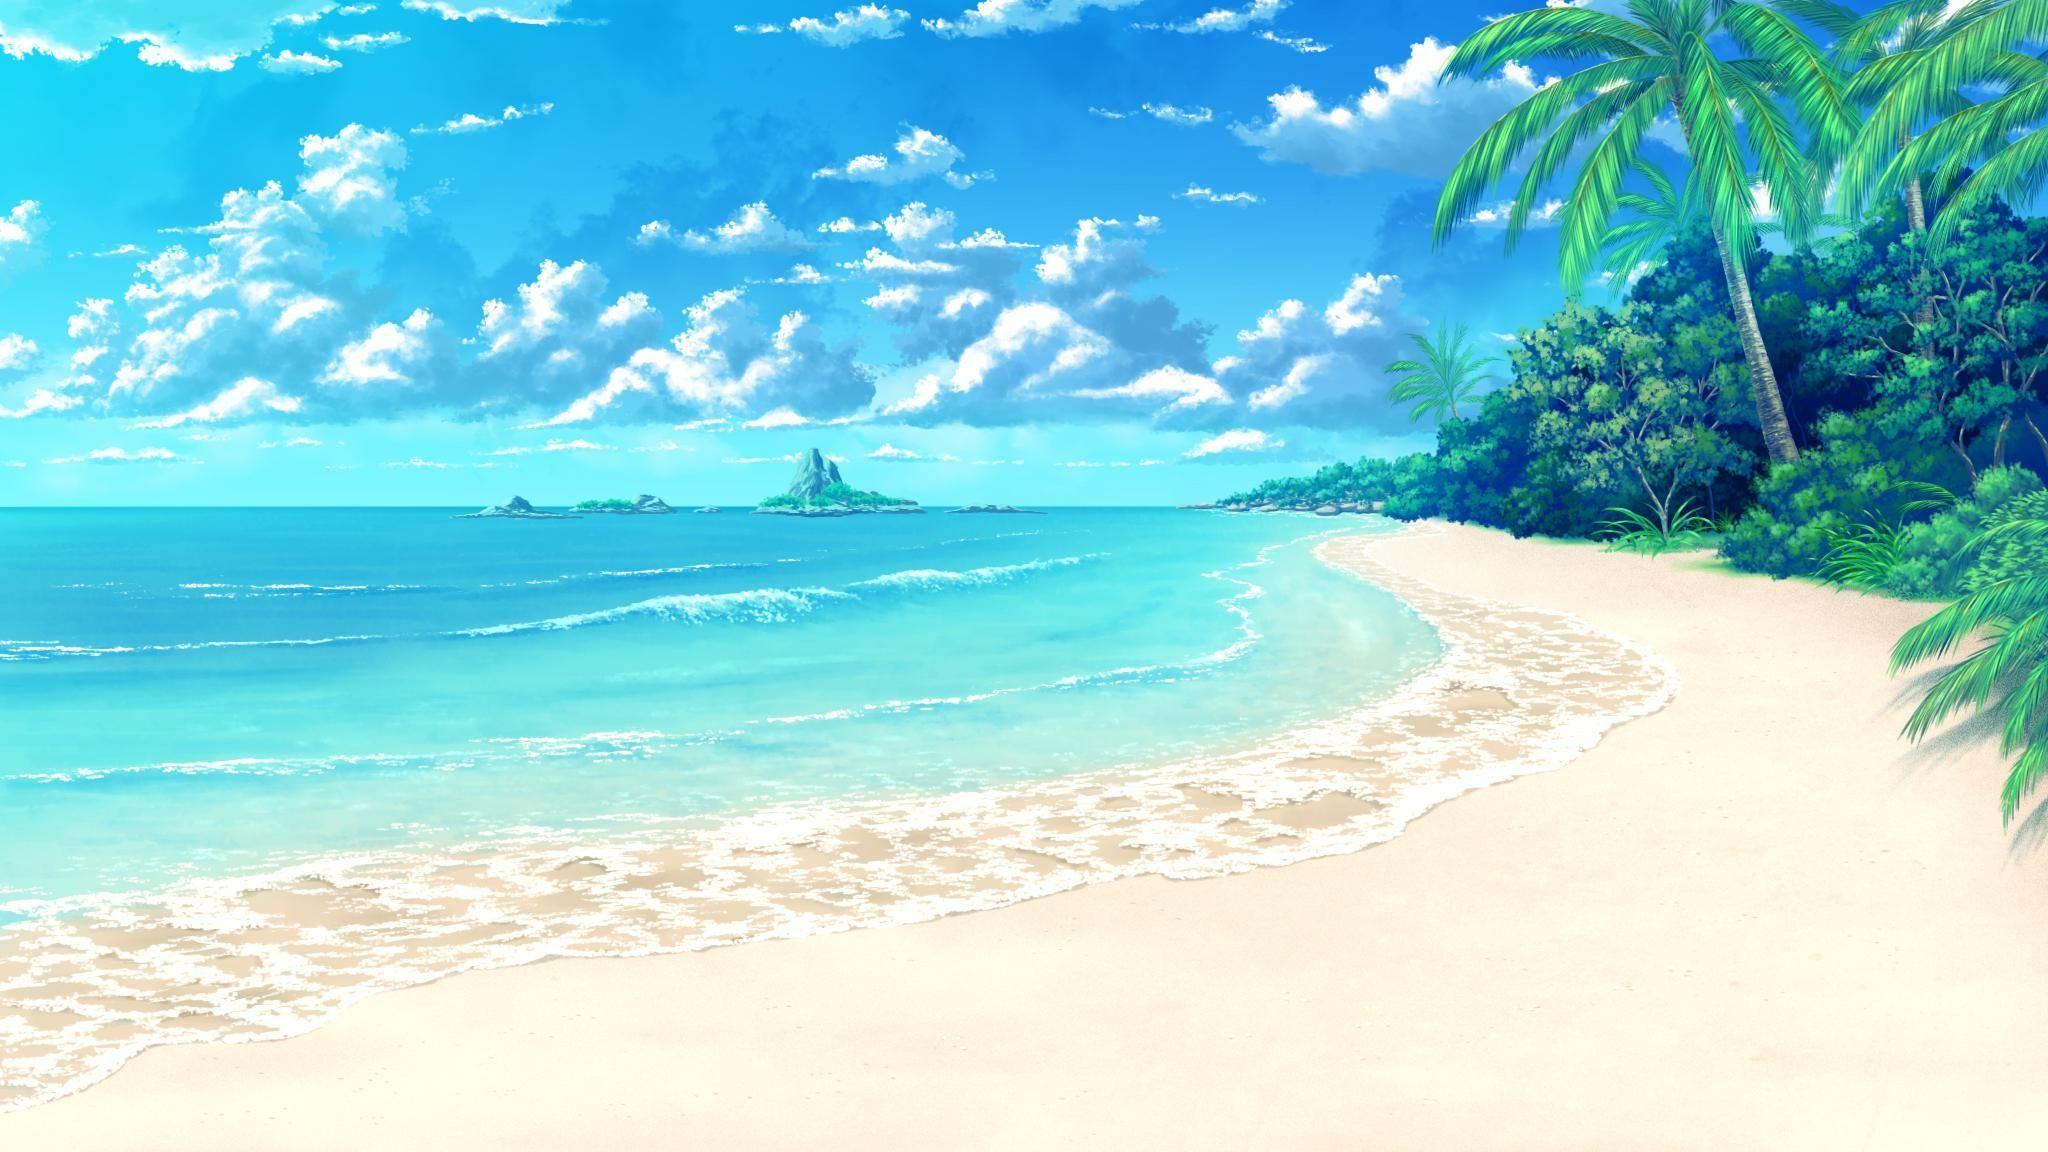 Anime Beach Scenery Wallpapers - Top Free Anime Beach Scenery